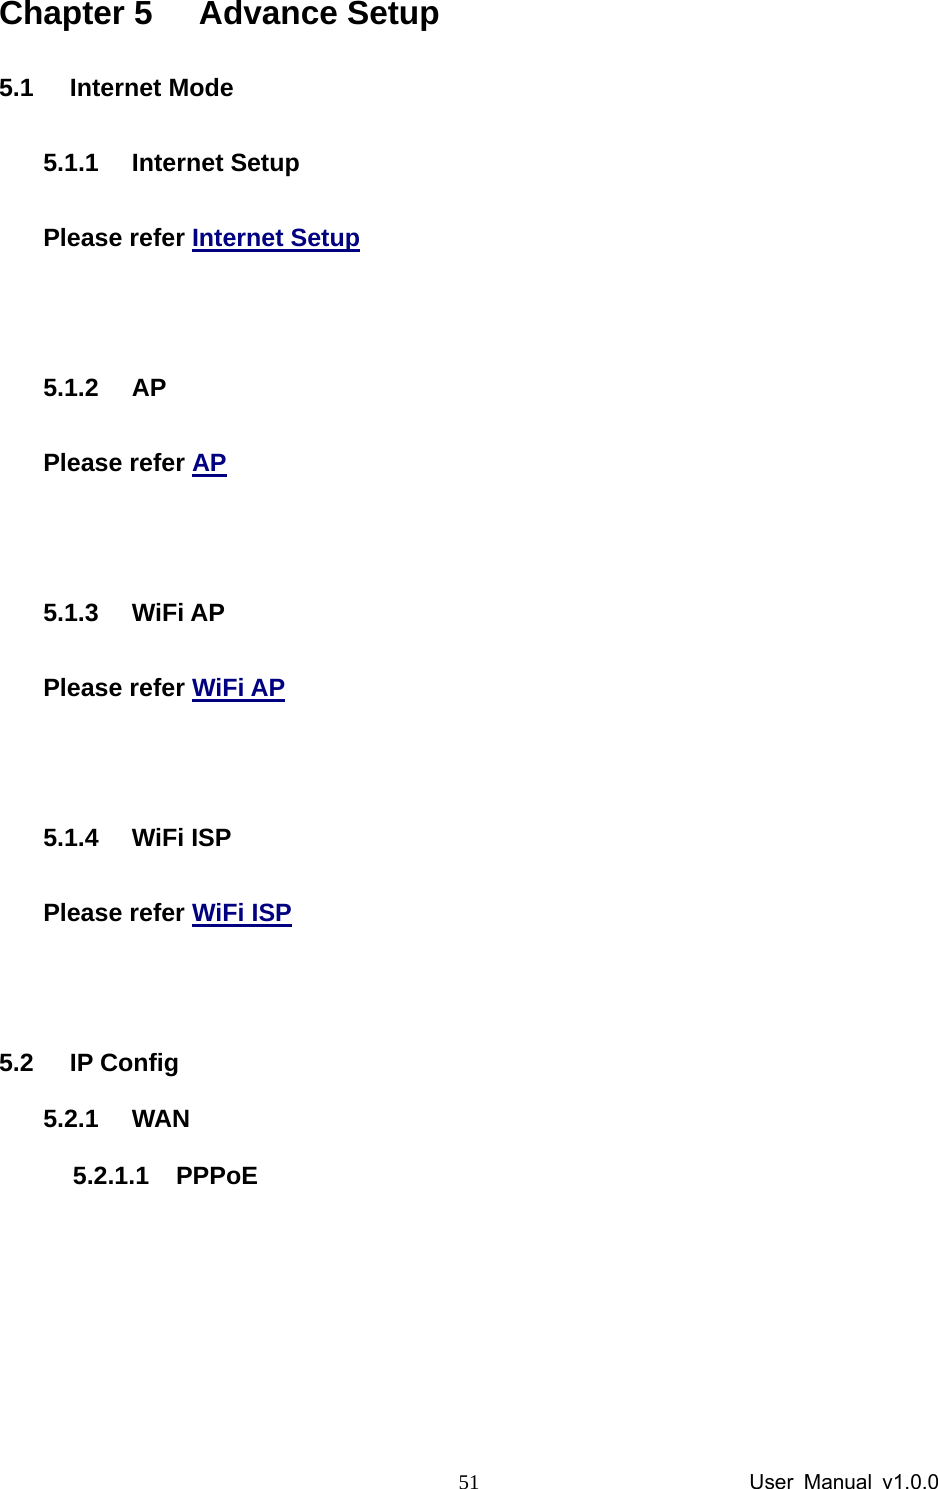                 User Manual v1.0.0 51Chapter 5  Advance Setup 5.1 Internet Mode 5.1.1 Internet Setup Please refer Internet Setup  5.1.2 AP Please refer AP  5.1.3 WiFi AP Please refer WiFi AP  5.1.4 WiFi ISP Please refer WiFi ISP  5.2 IP Config 5.2.1 WAN 5.2.1.1 PPPoE 